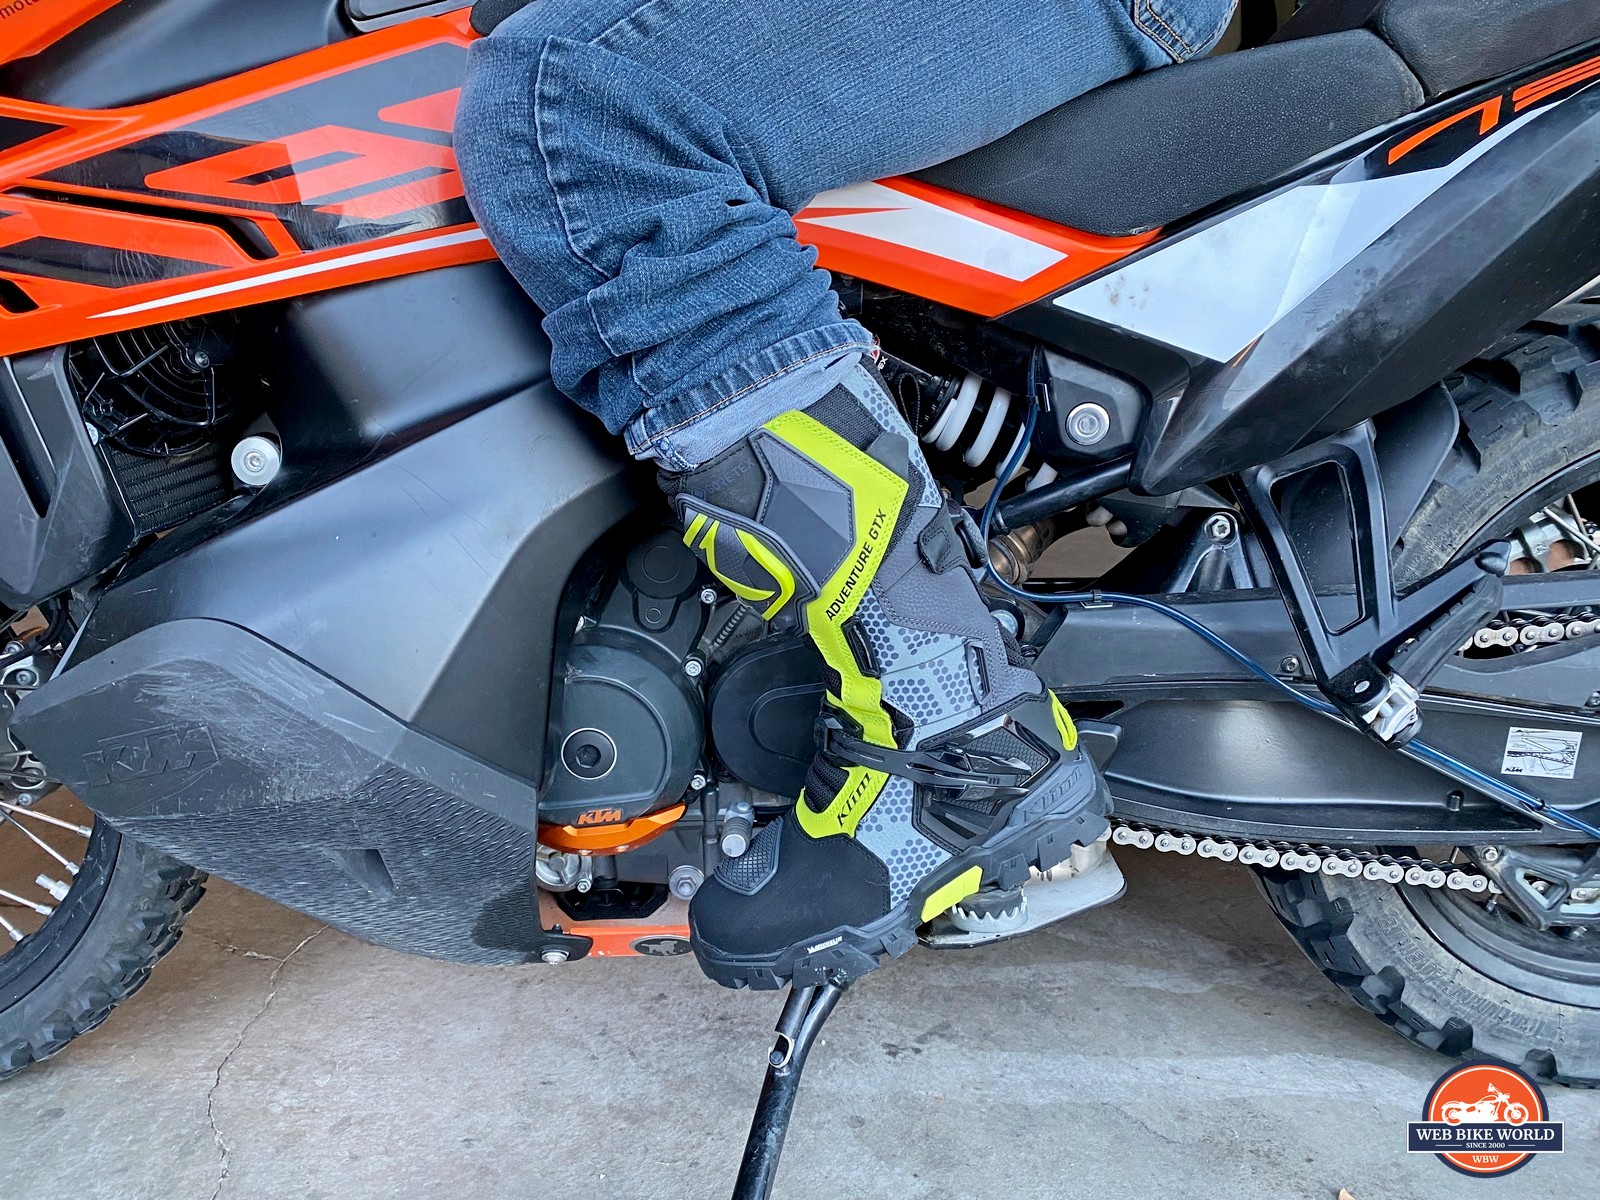 Rider wearing Klim GTX boots on motorcycle